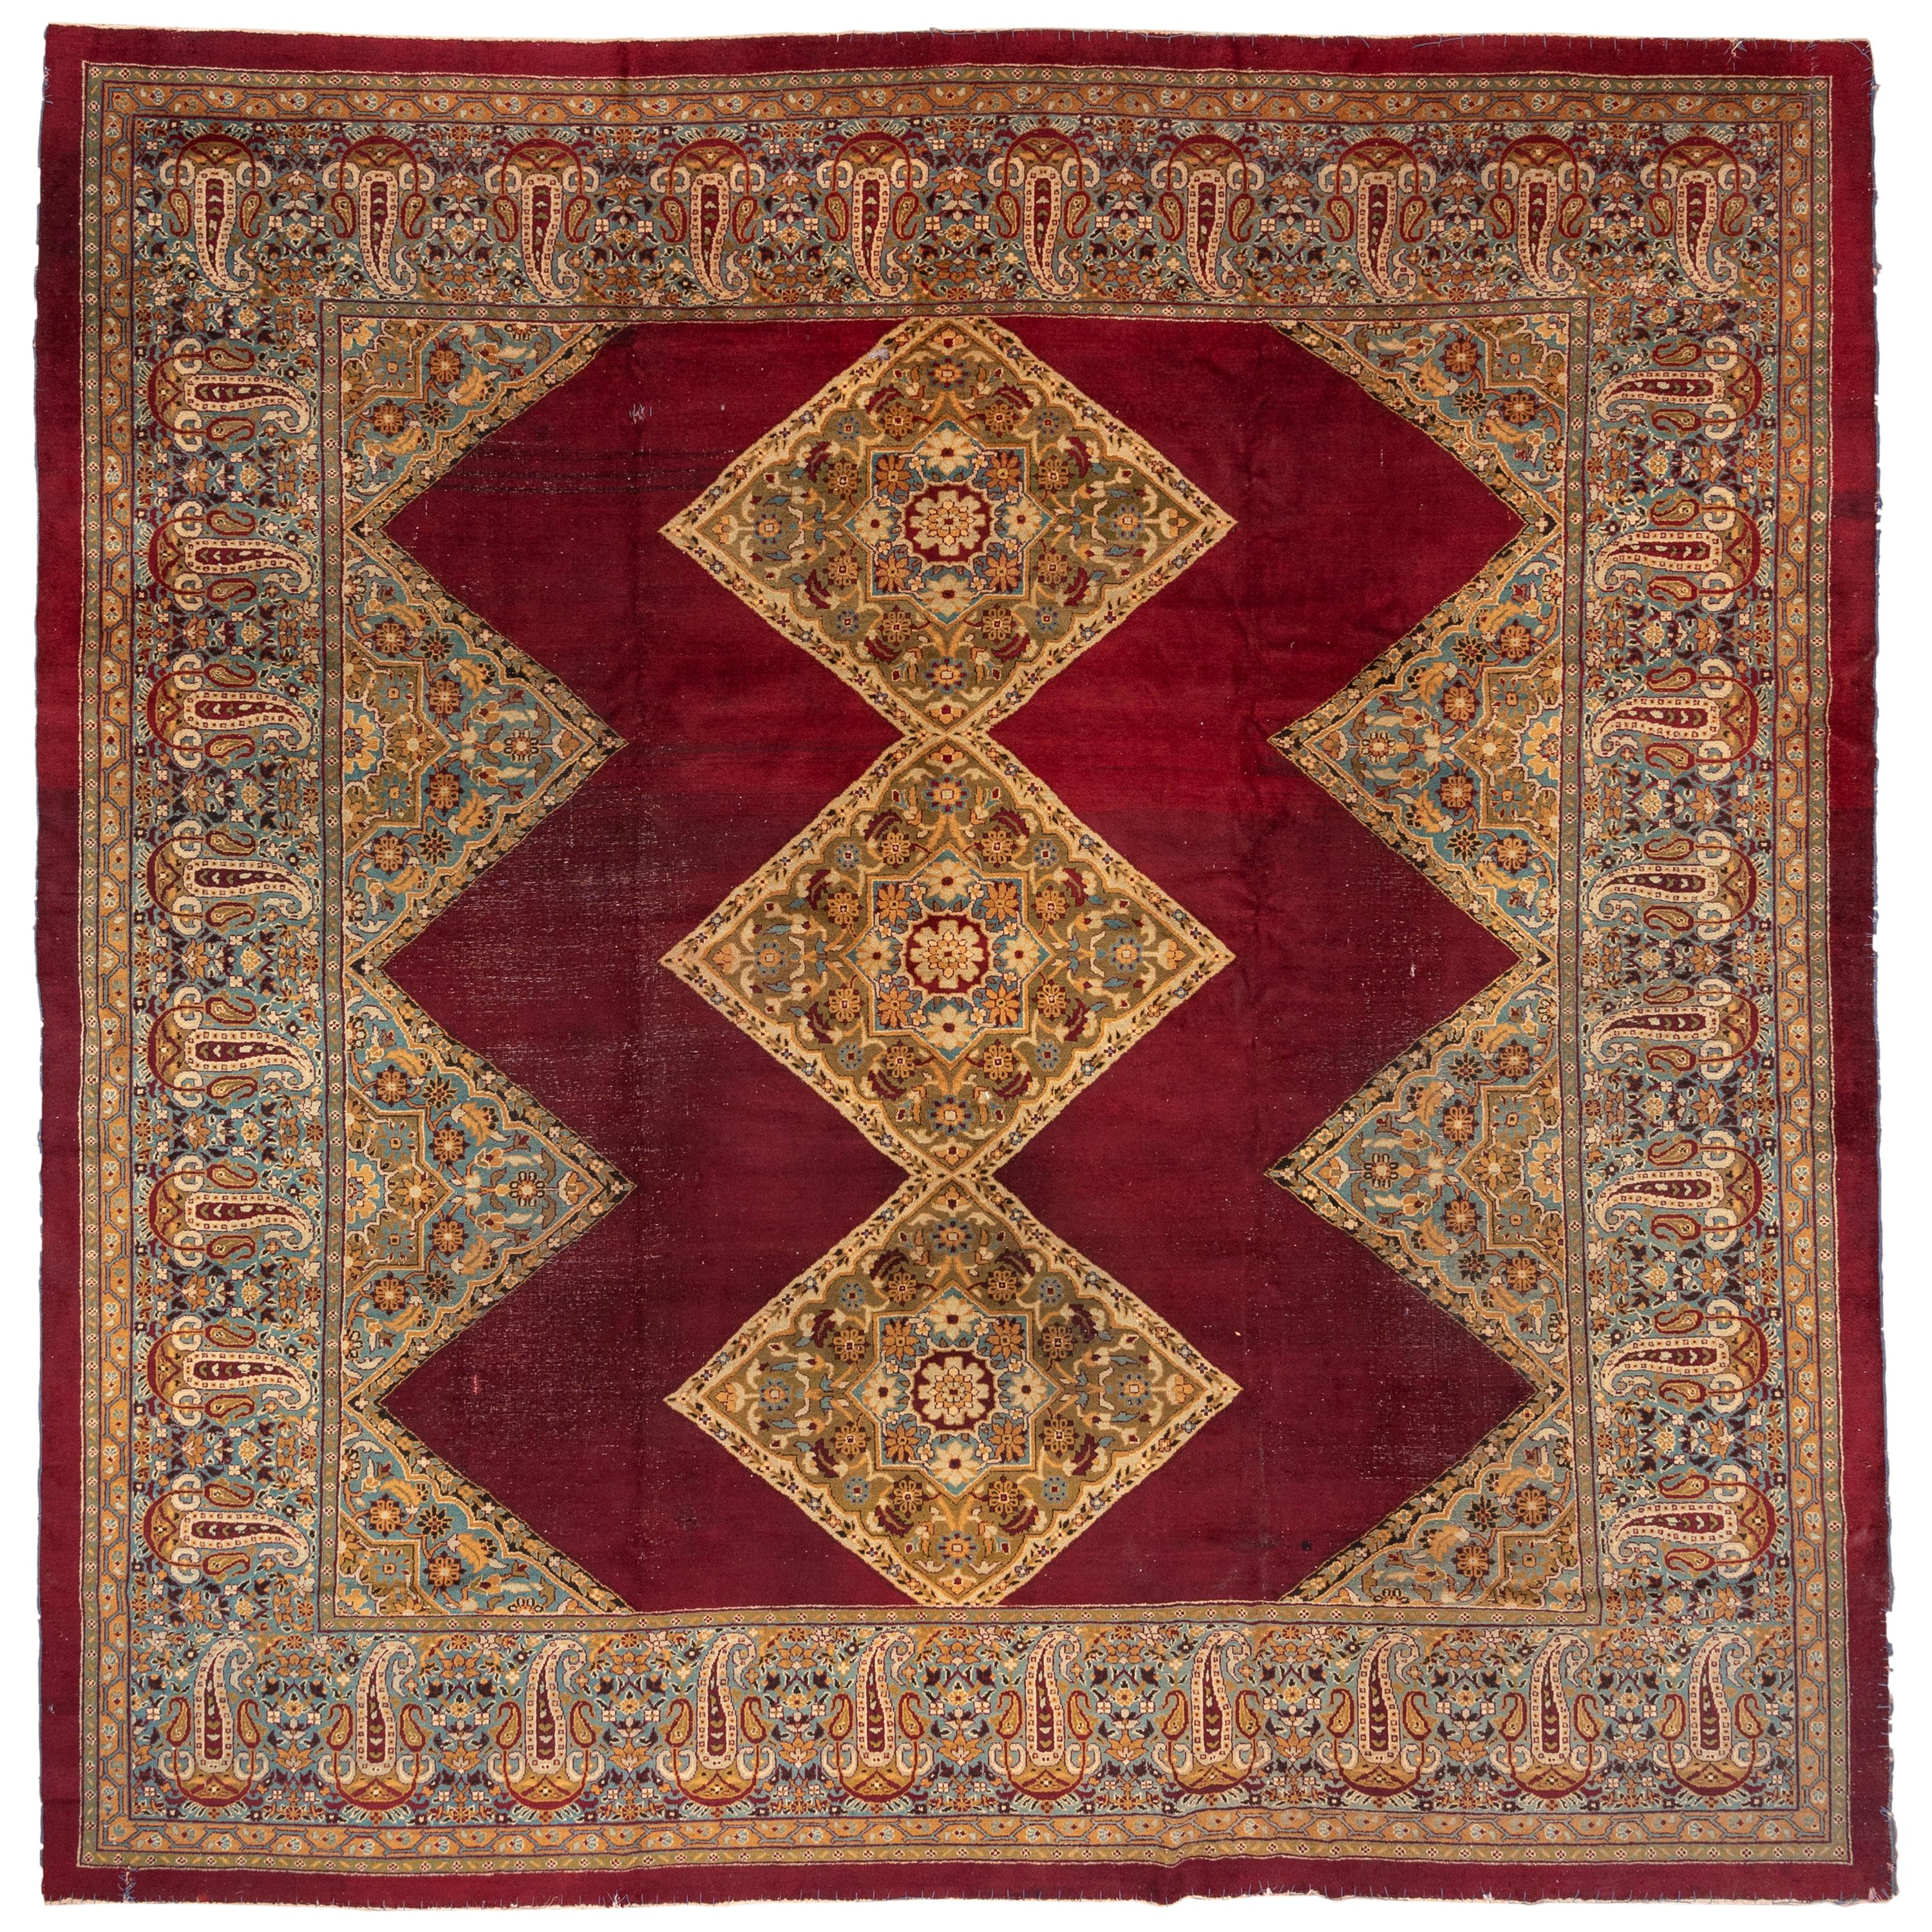 Antique Indian Amritzar Square Carpet, Burgundy Field, Multicolored Borders